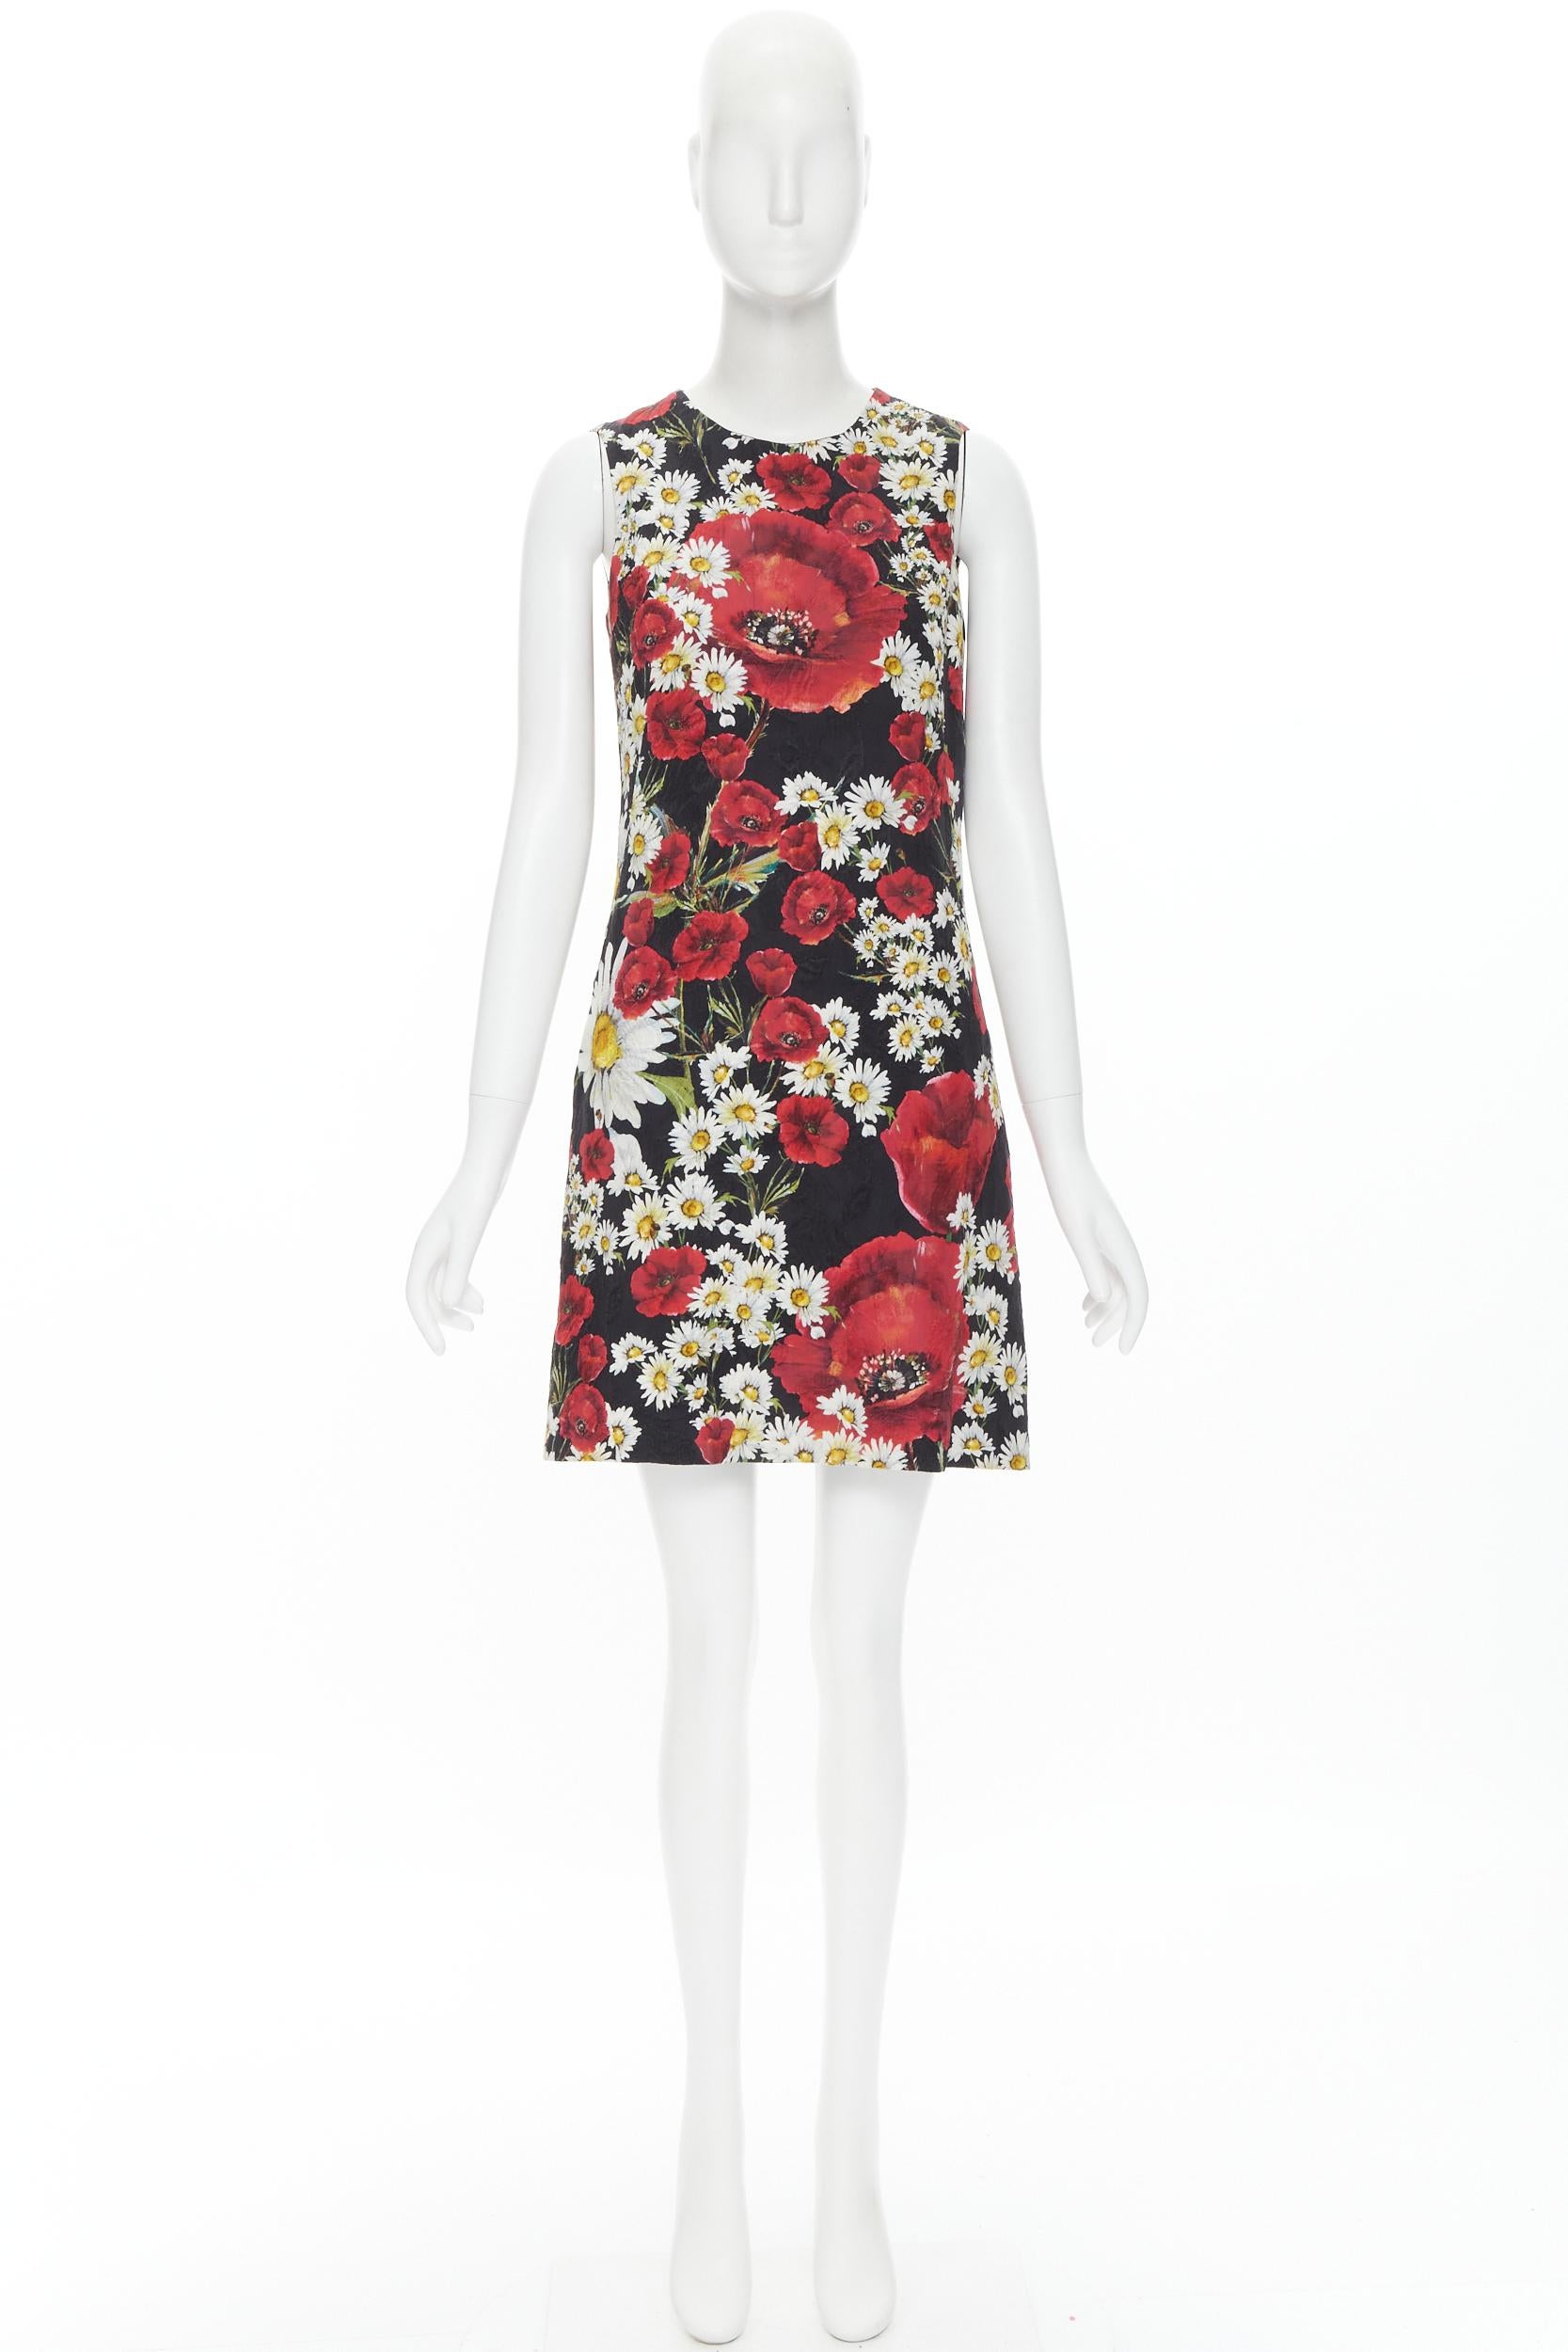 DOLCE GABBANA Poppy Daisy floral print jacquard mini sheath dress IT36 XS For Sale 4